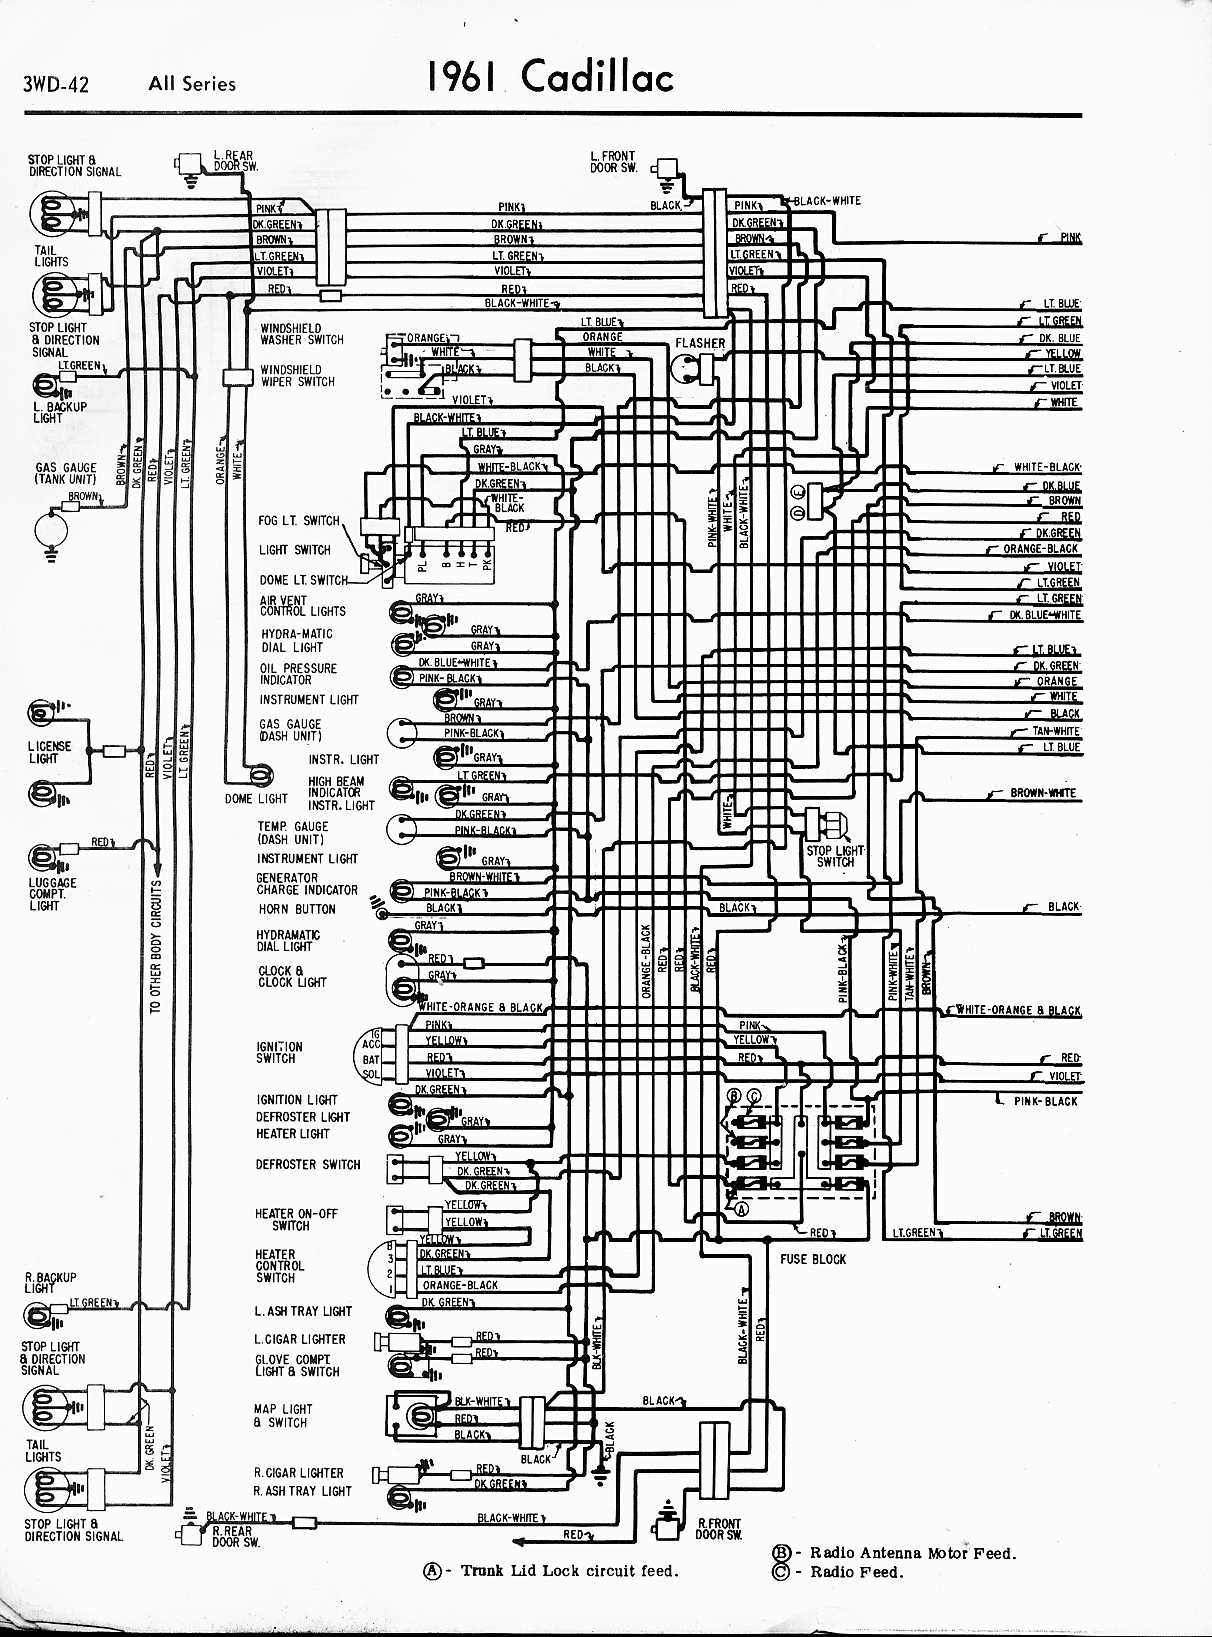 Wiring Diagram PDF: 1941 Cadillac Wiring Diagram